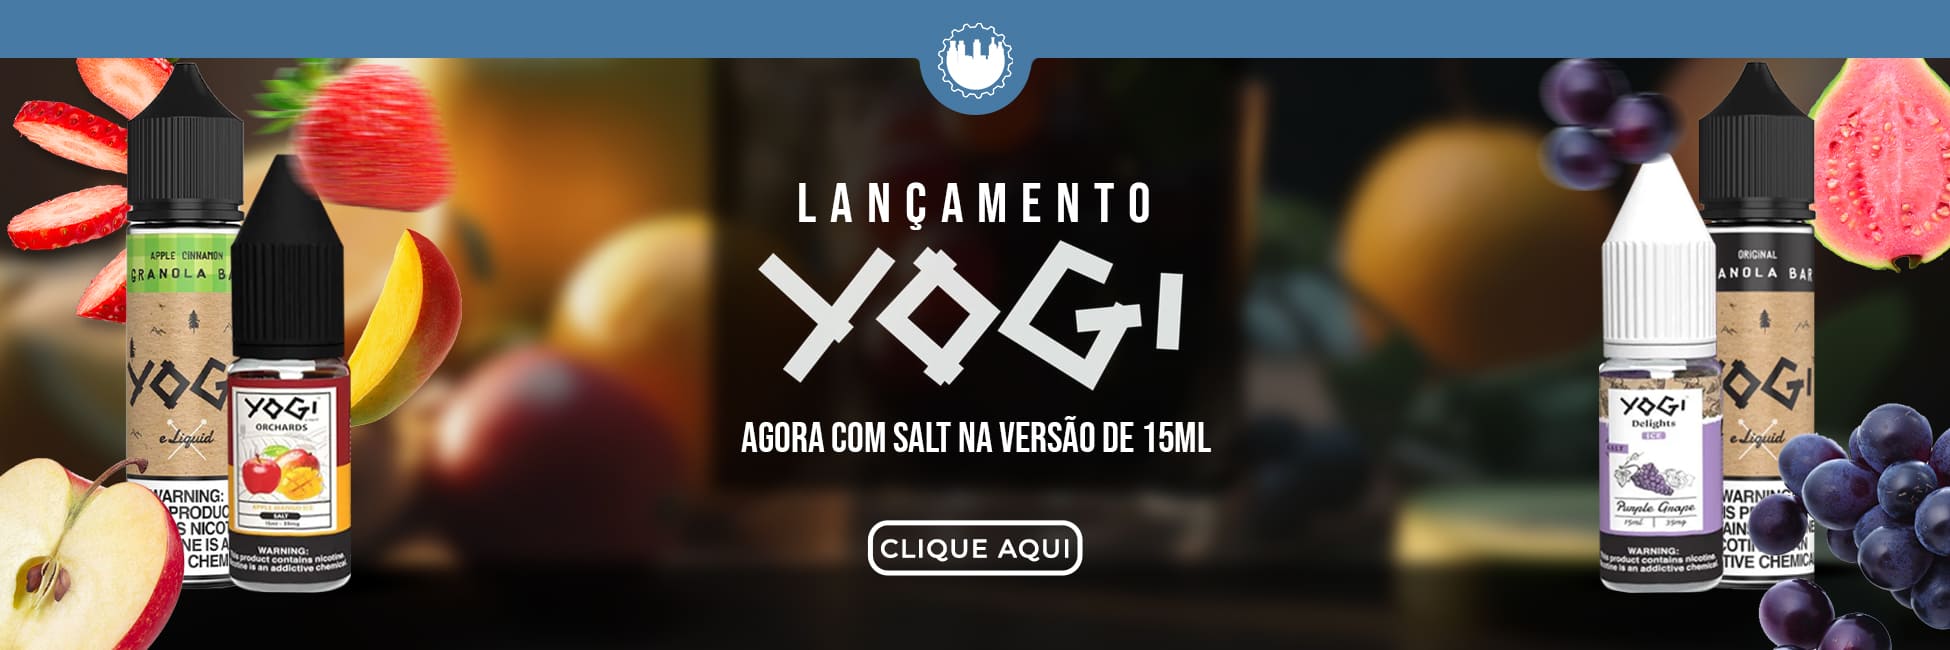 web banner yogi